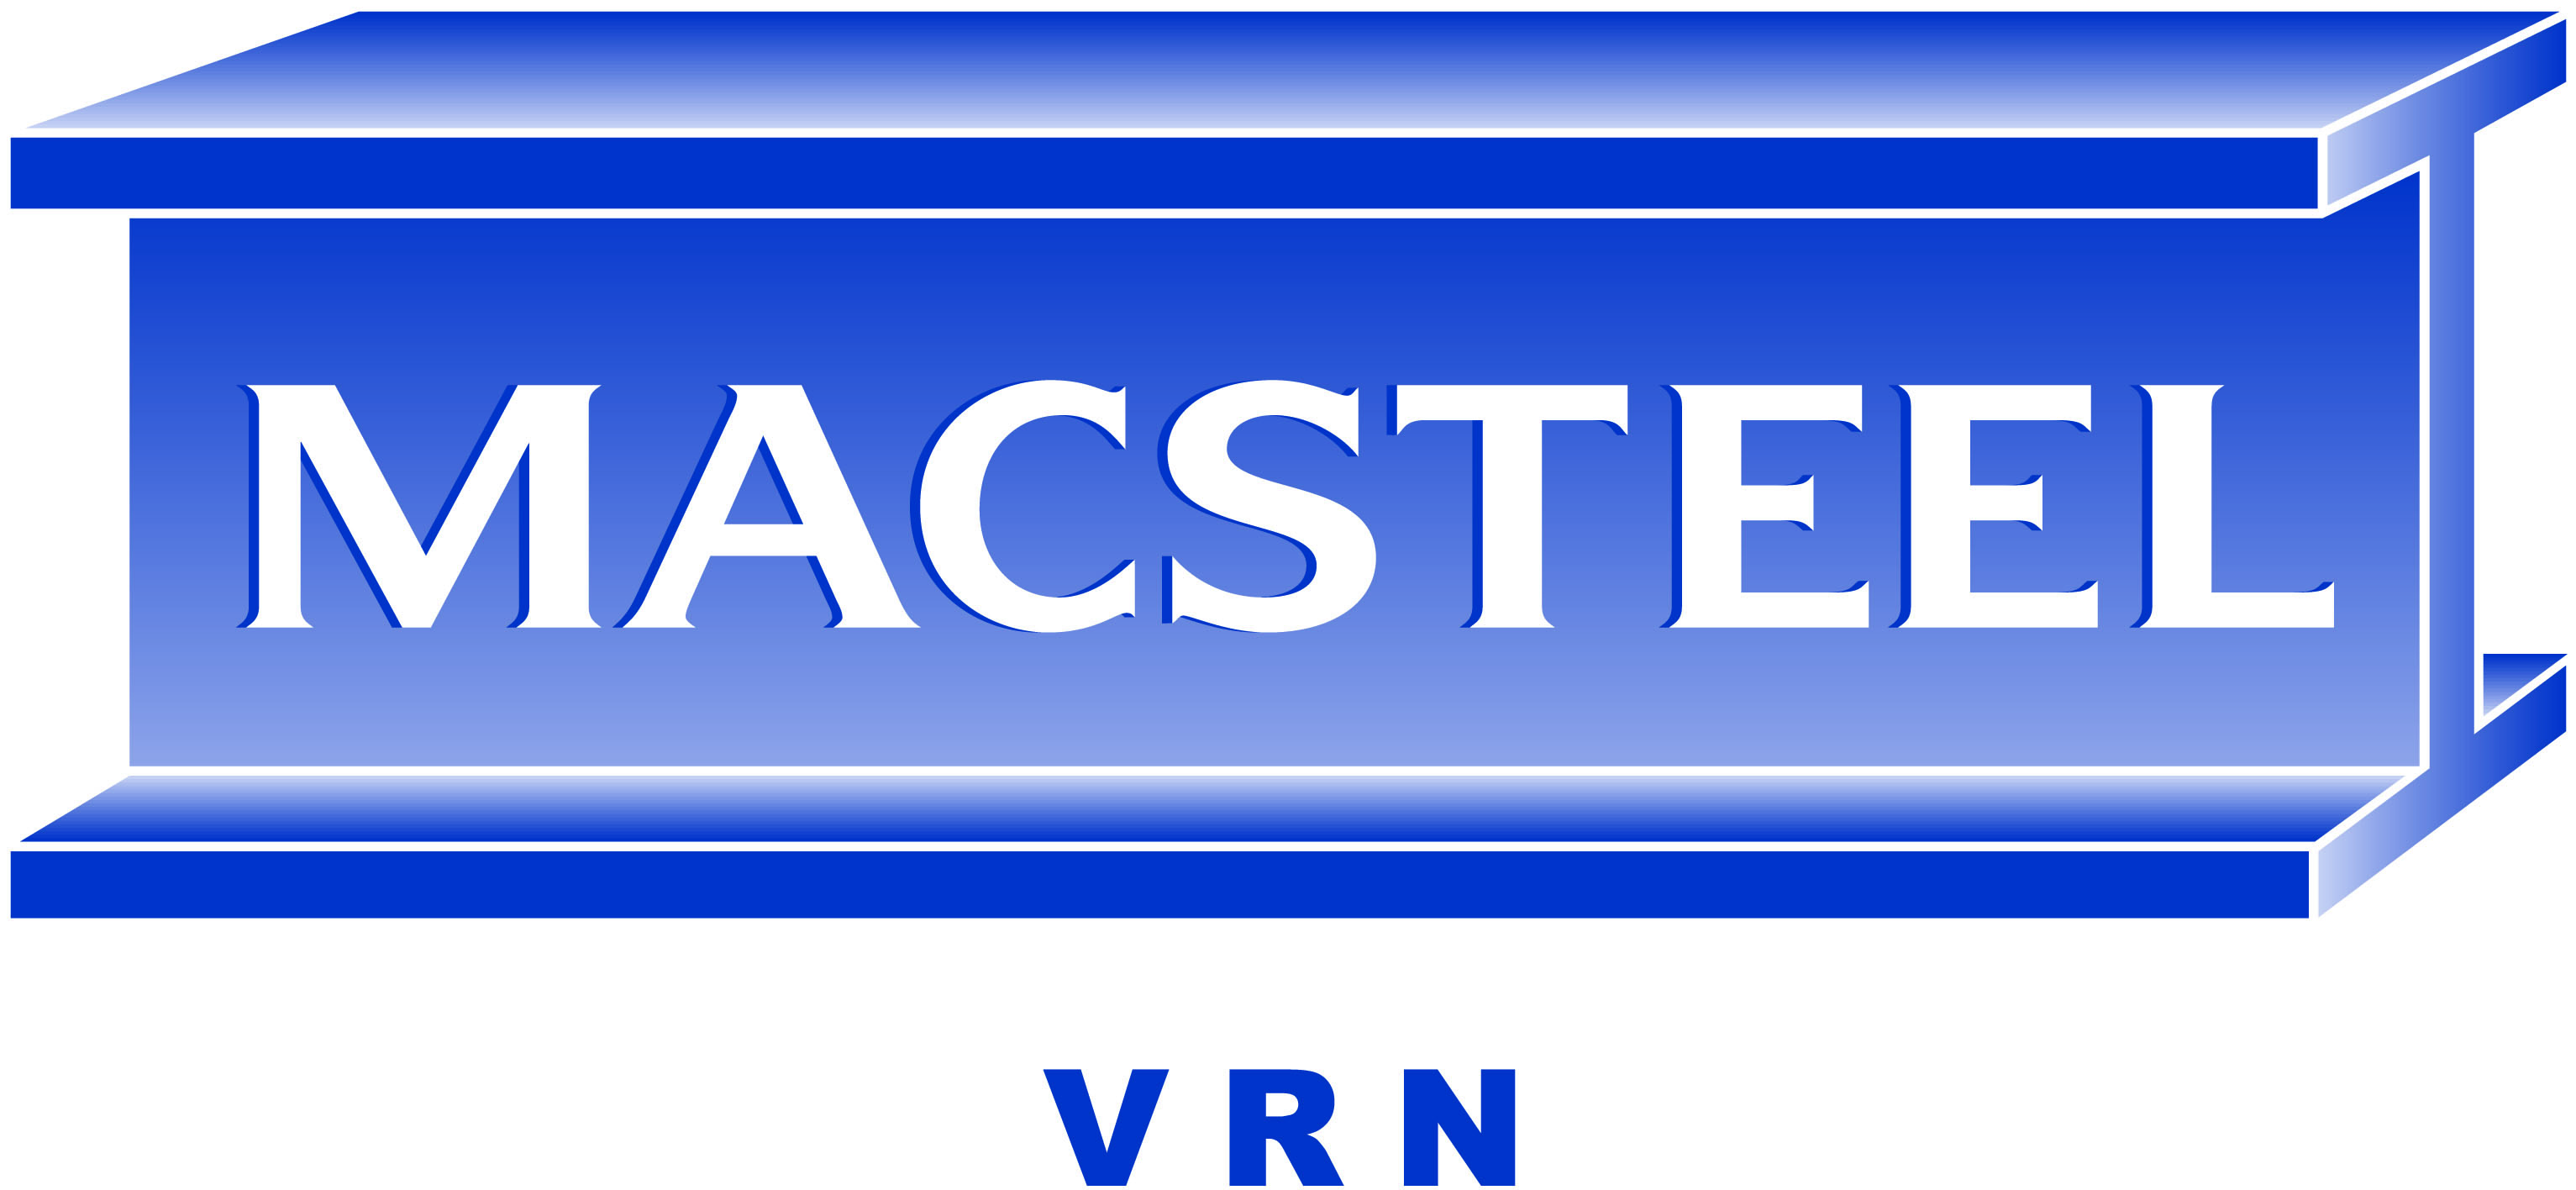 Macsteel Vrn- Stainless logo